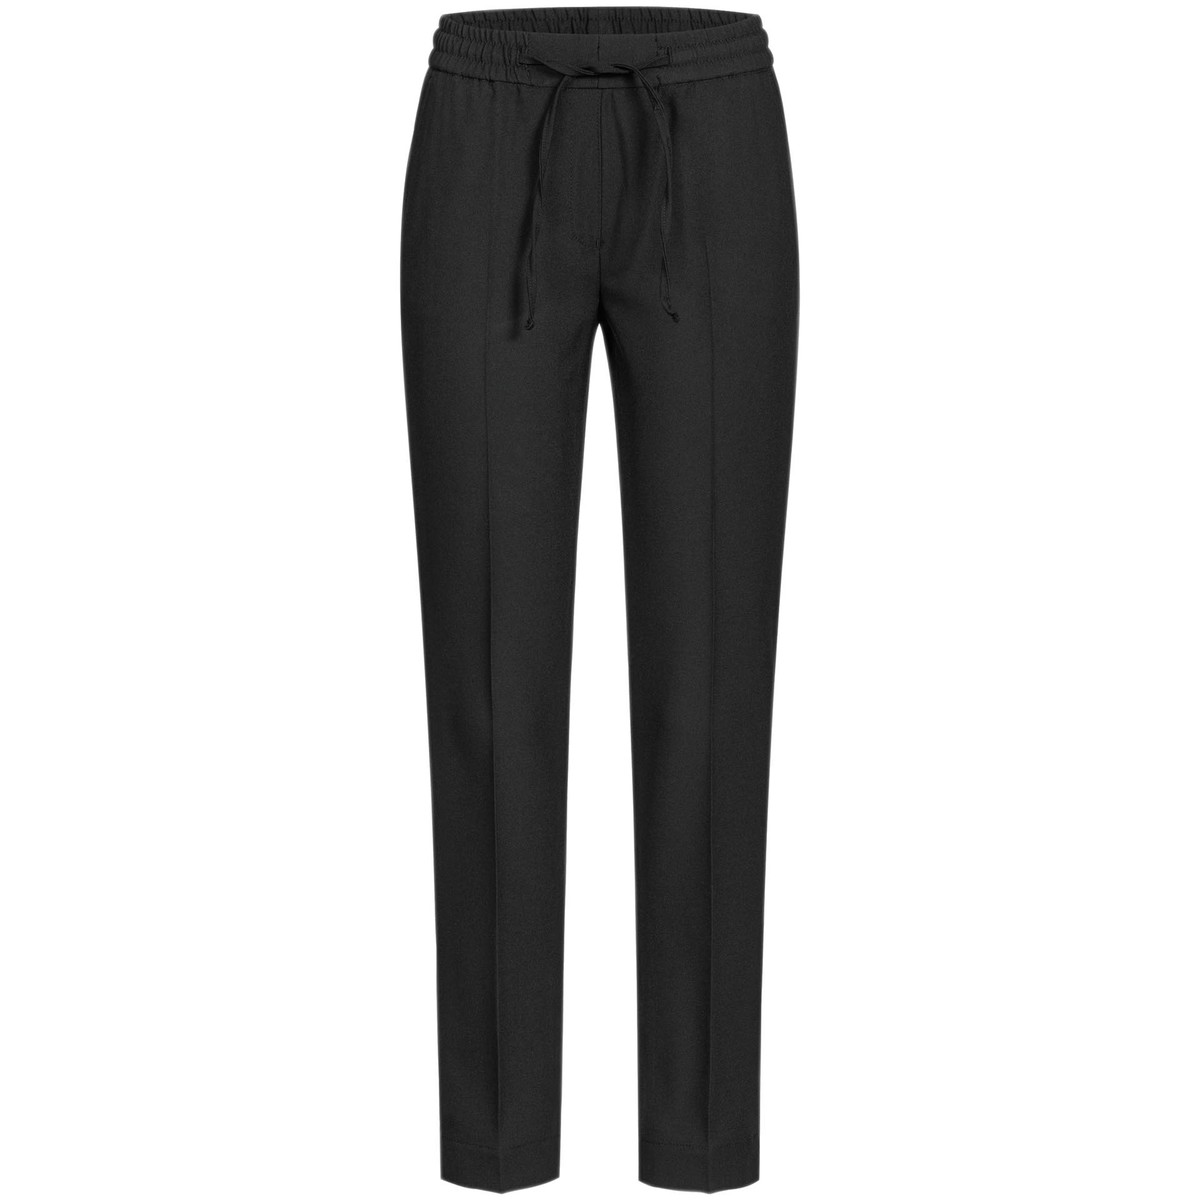 Damen-Hose "Joggpants" schwarz Größe 34